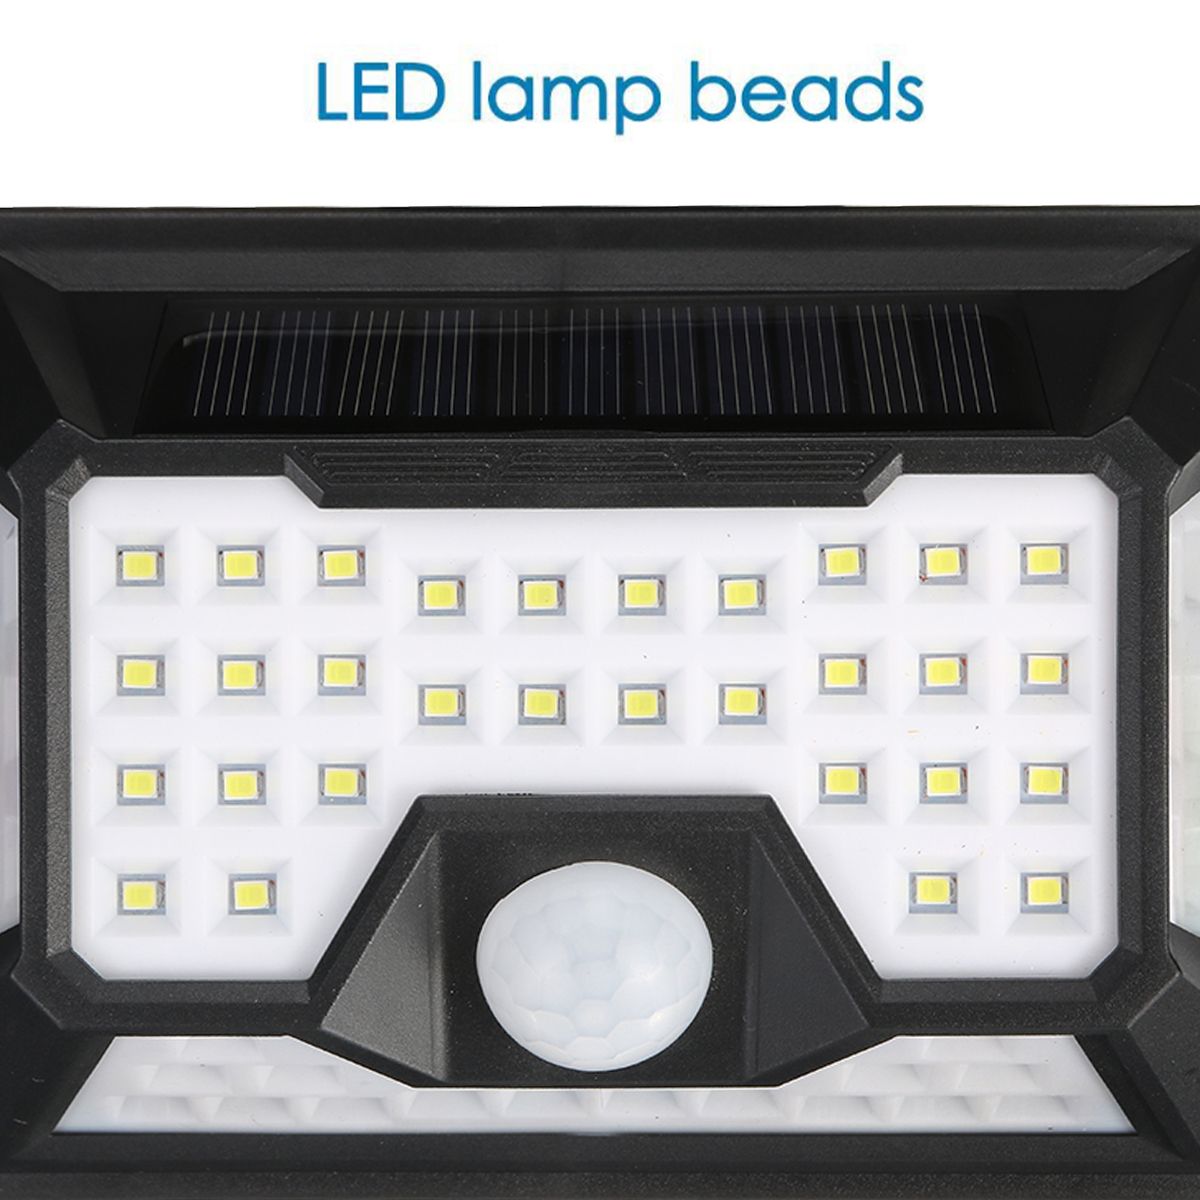 66-LED-Outdoor-Light-Solar-Powered-Motion-Sensor-Waterproof-Garden-Wall-Lamp-1698737